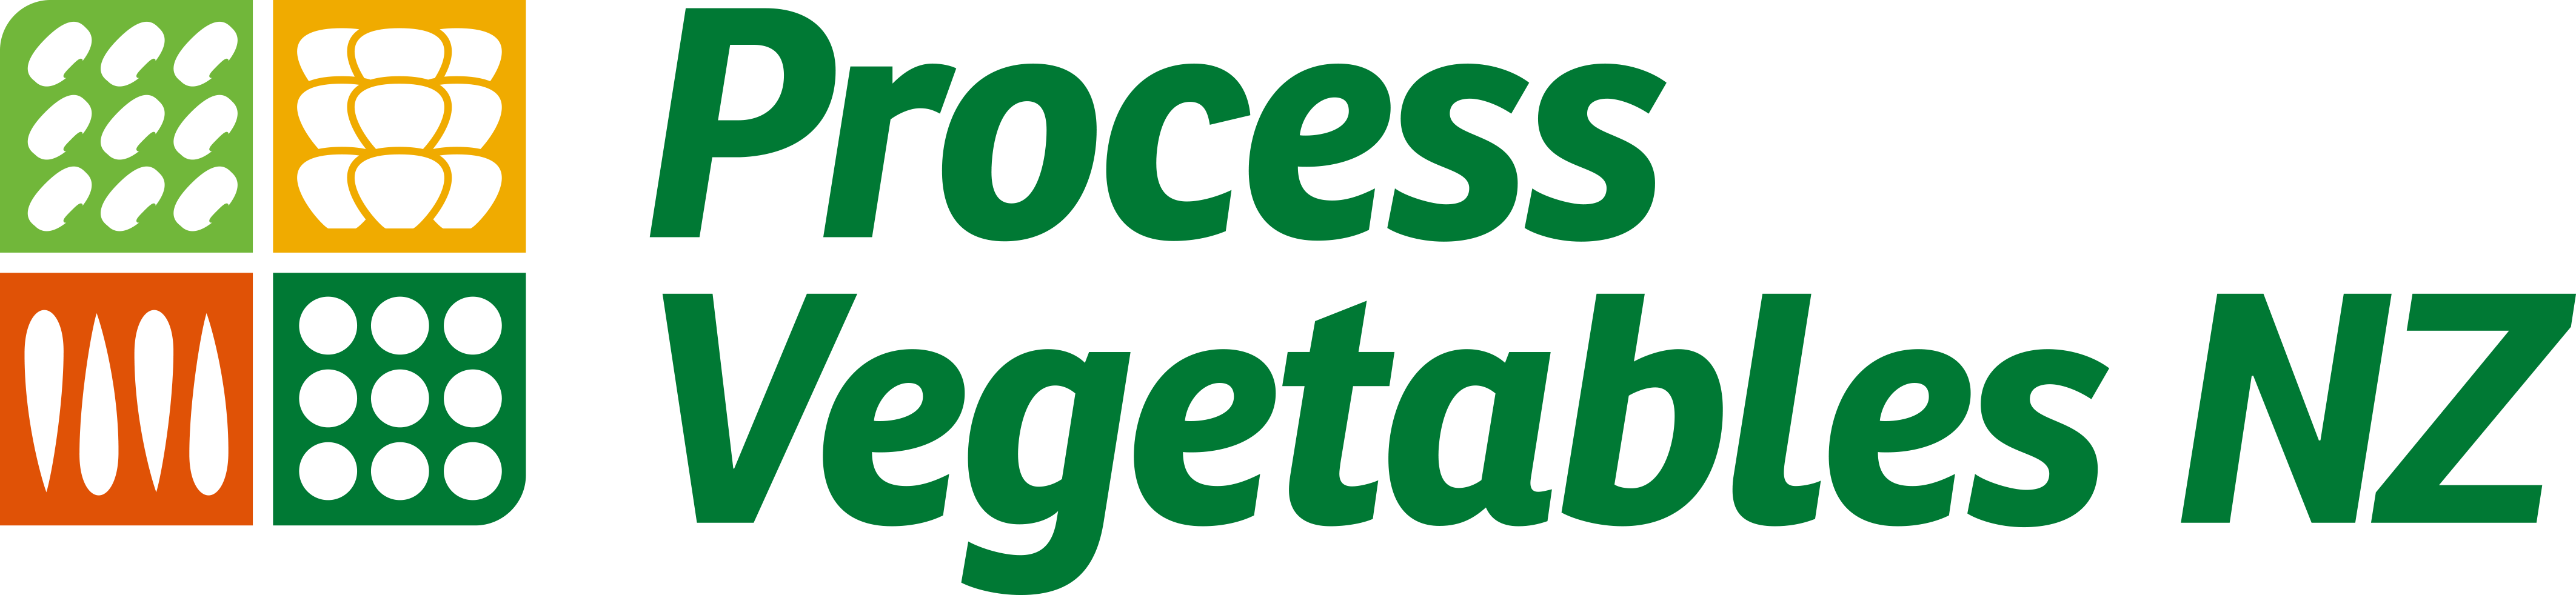 Process Vegetables